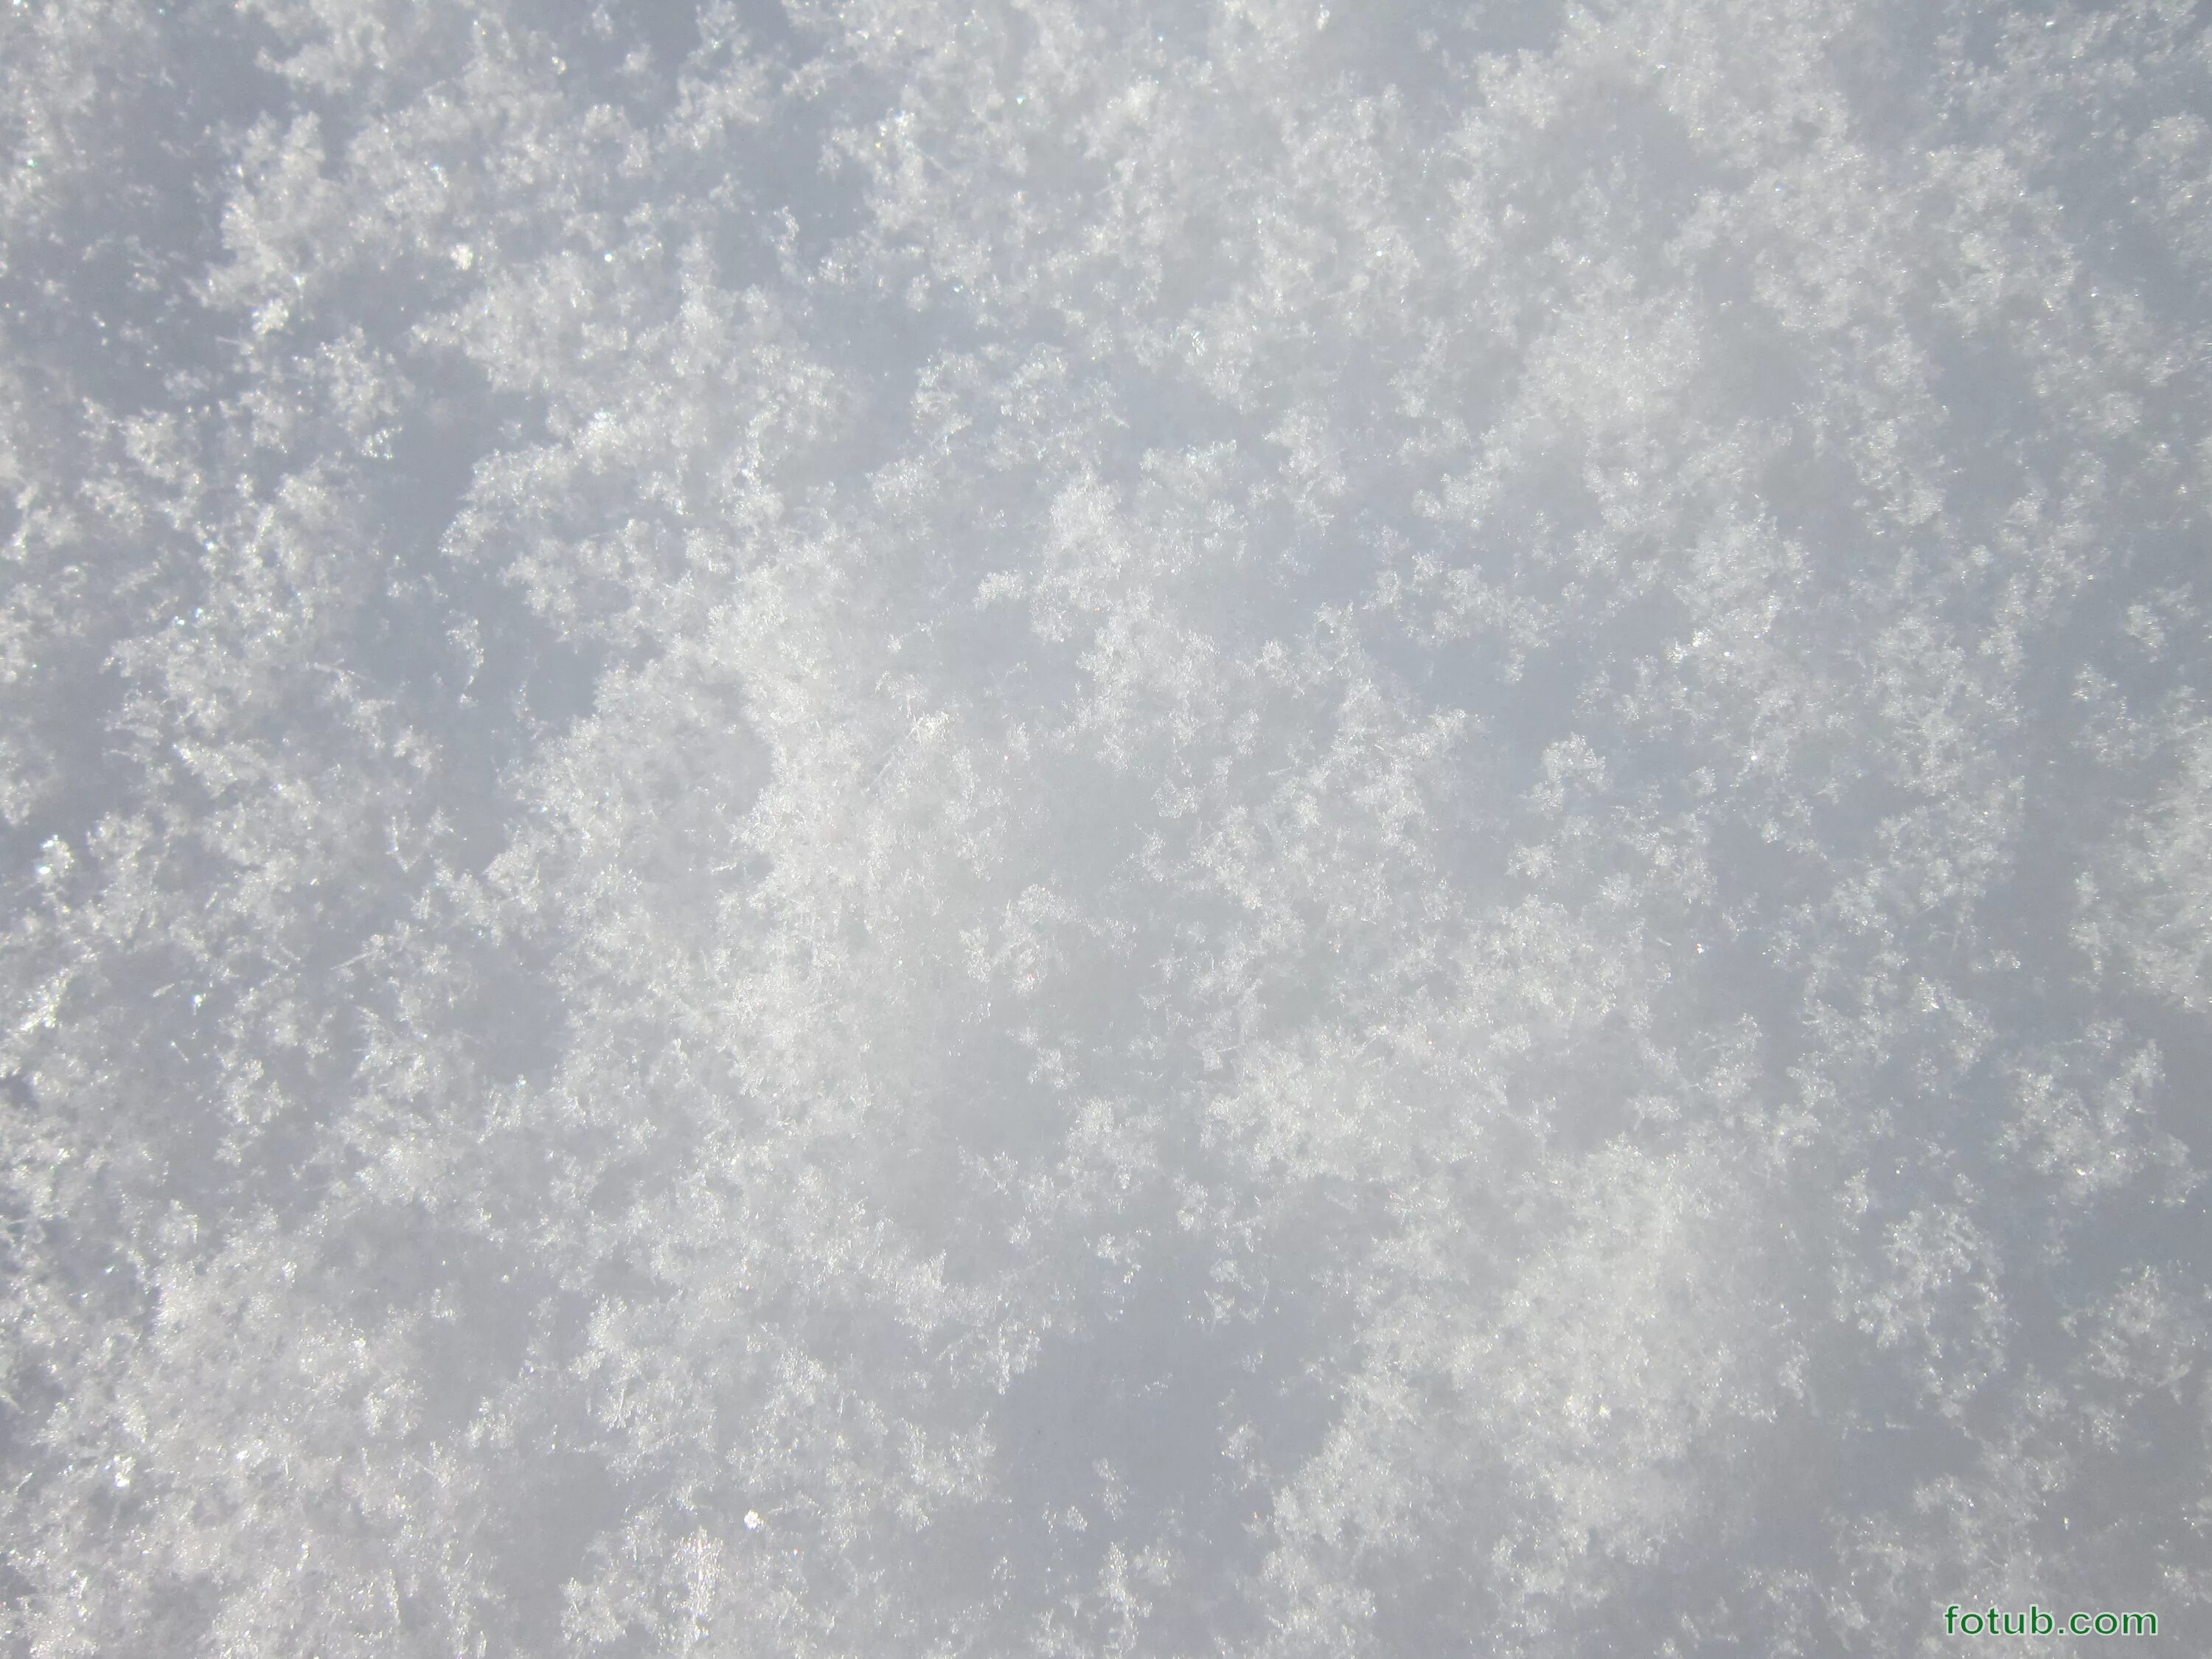 Снежок чистый. Чистый снег. Снег текстура. Сугроб чистого снега. Грязный снег текстура.